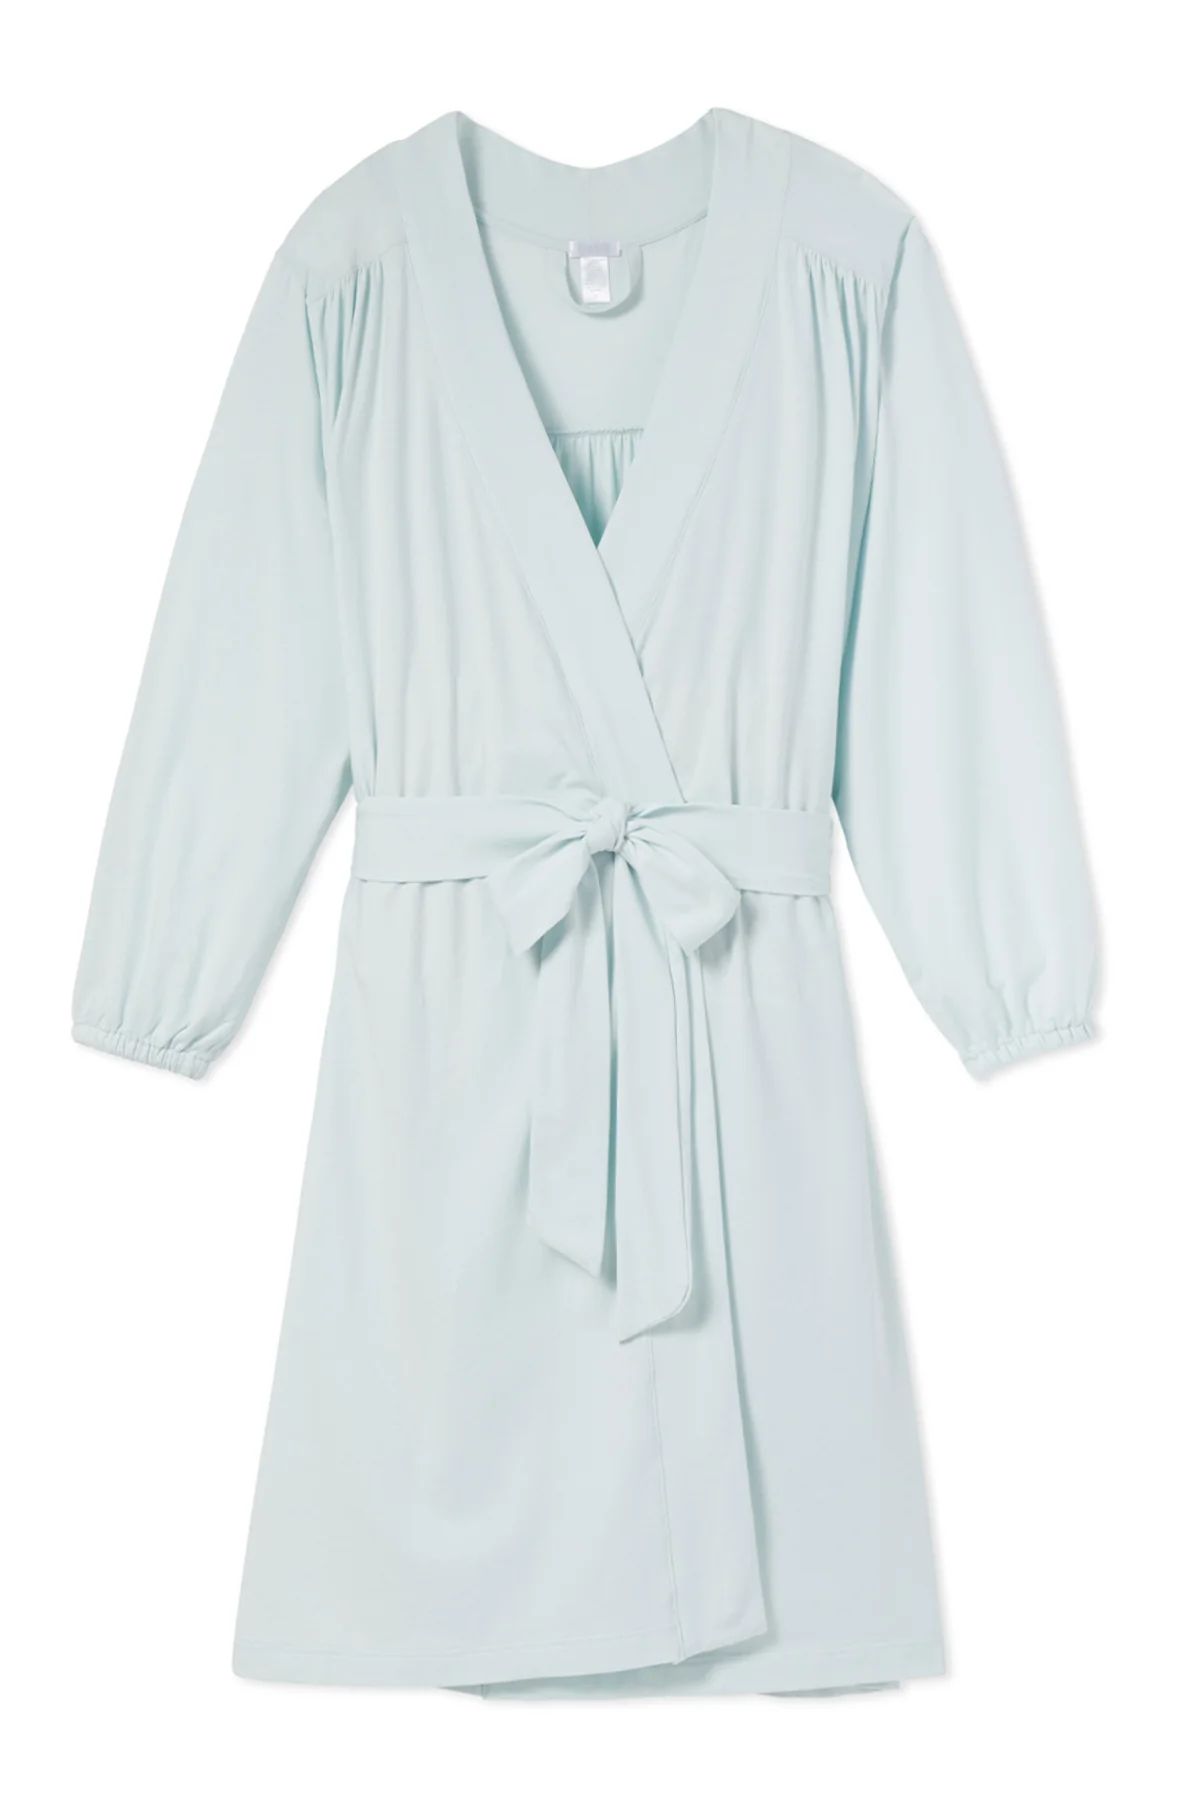 DreamKnit Robe in Coastal Blue | LAKE Pajamas